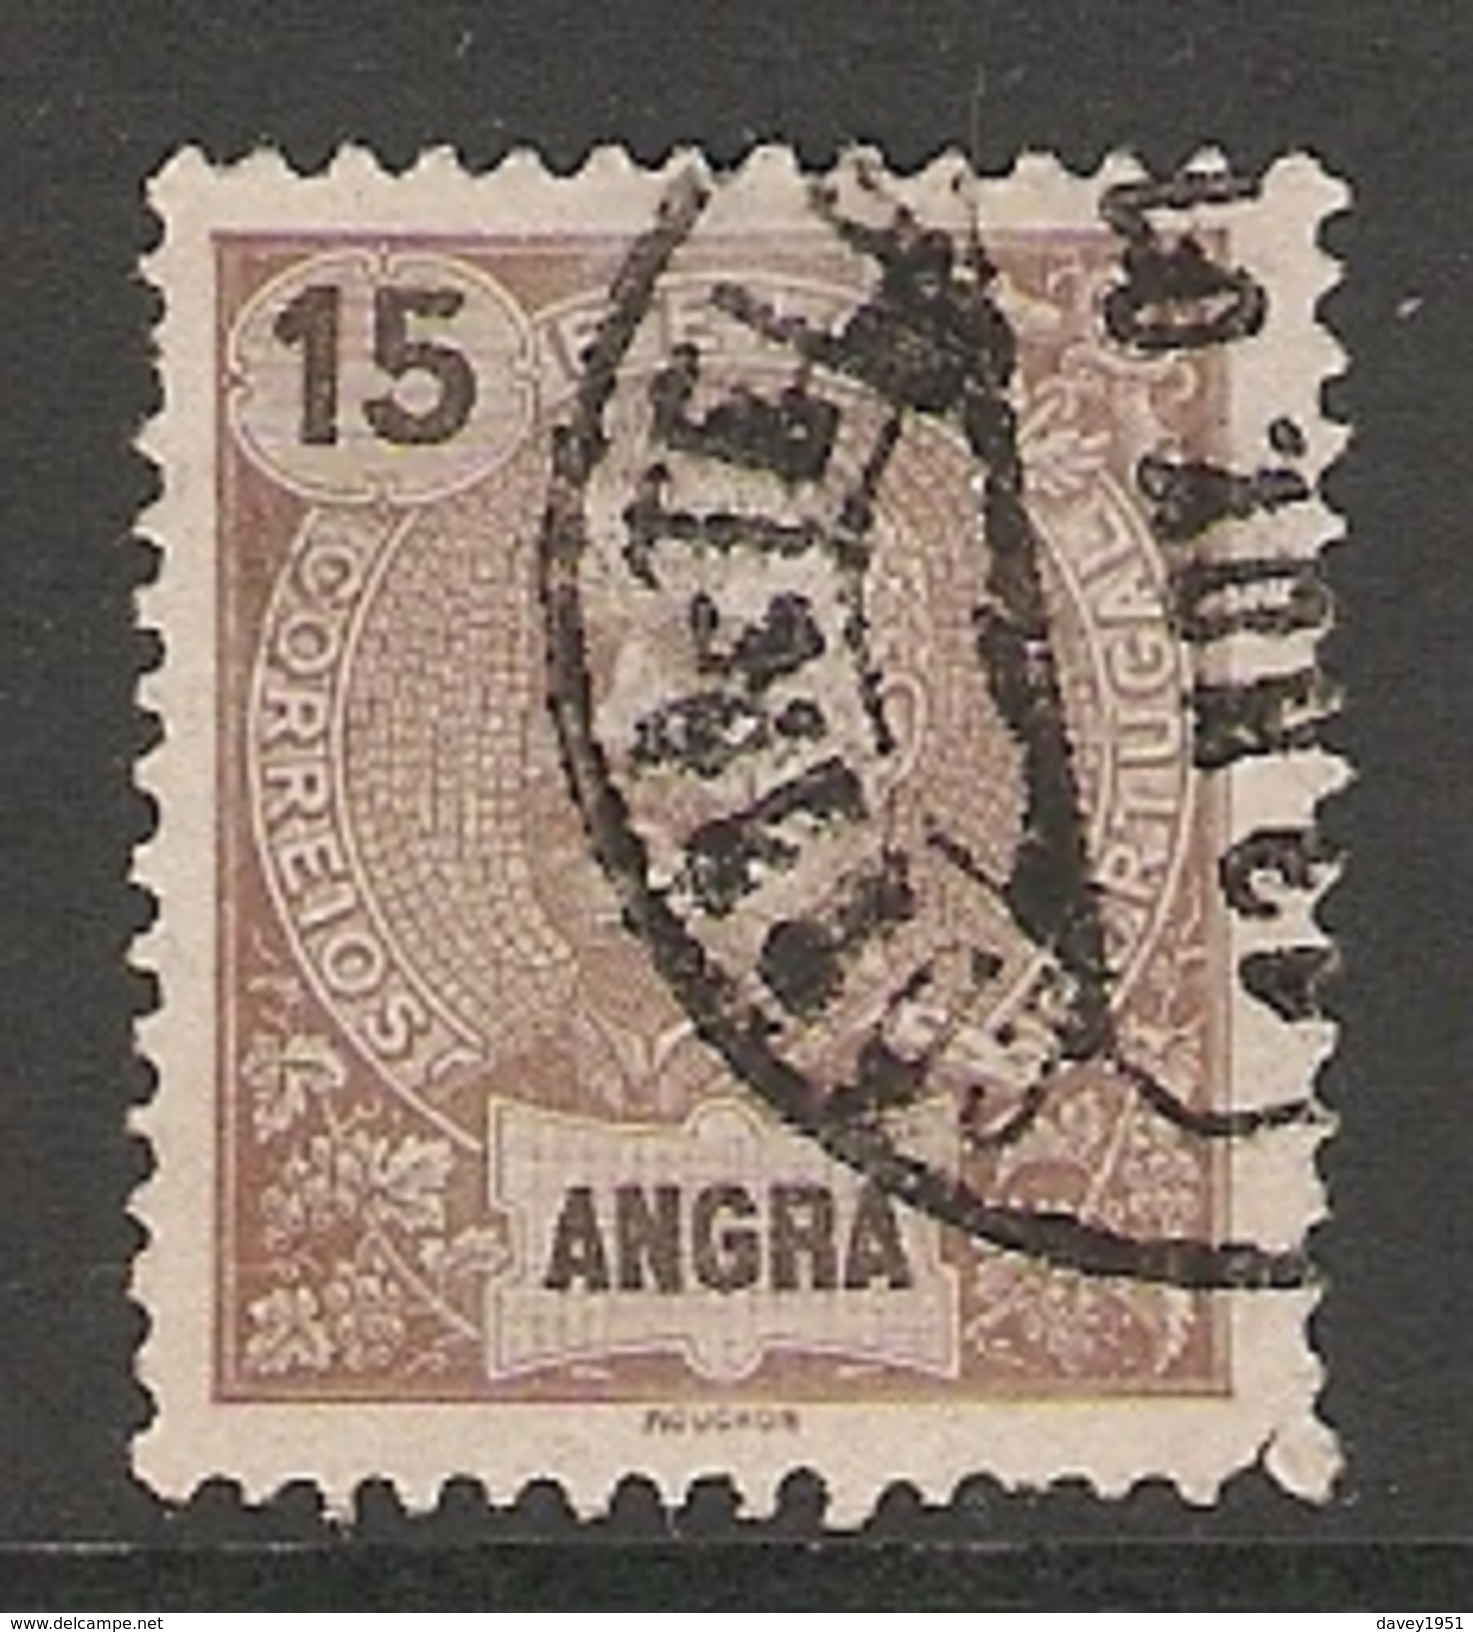 004526 Angra 1897 15 Reis FU - Angra